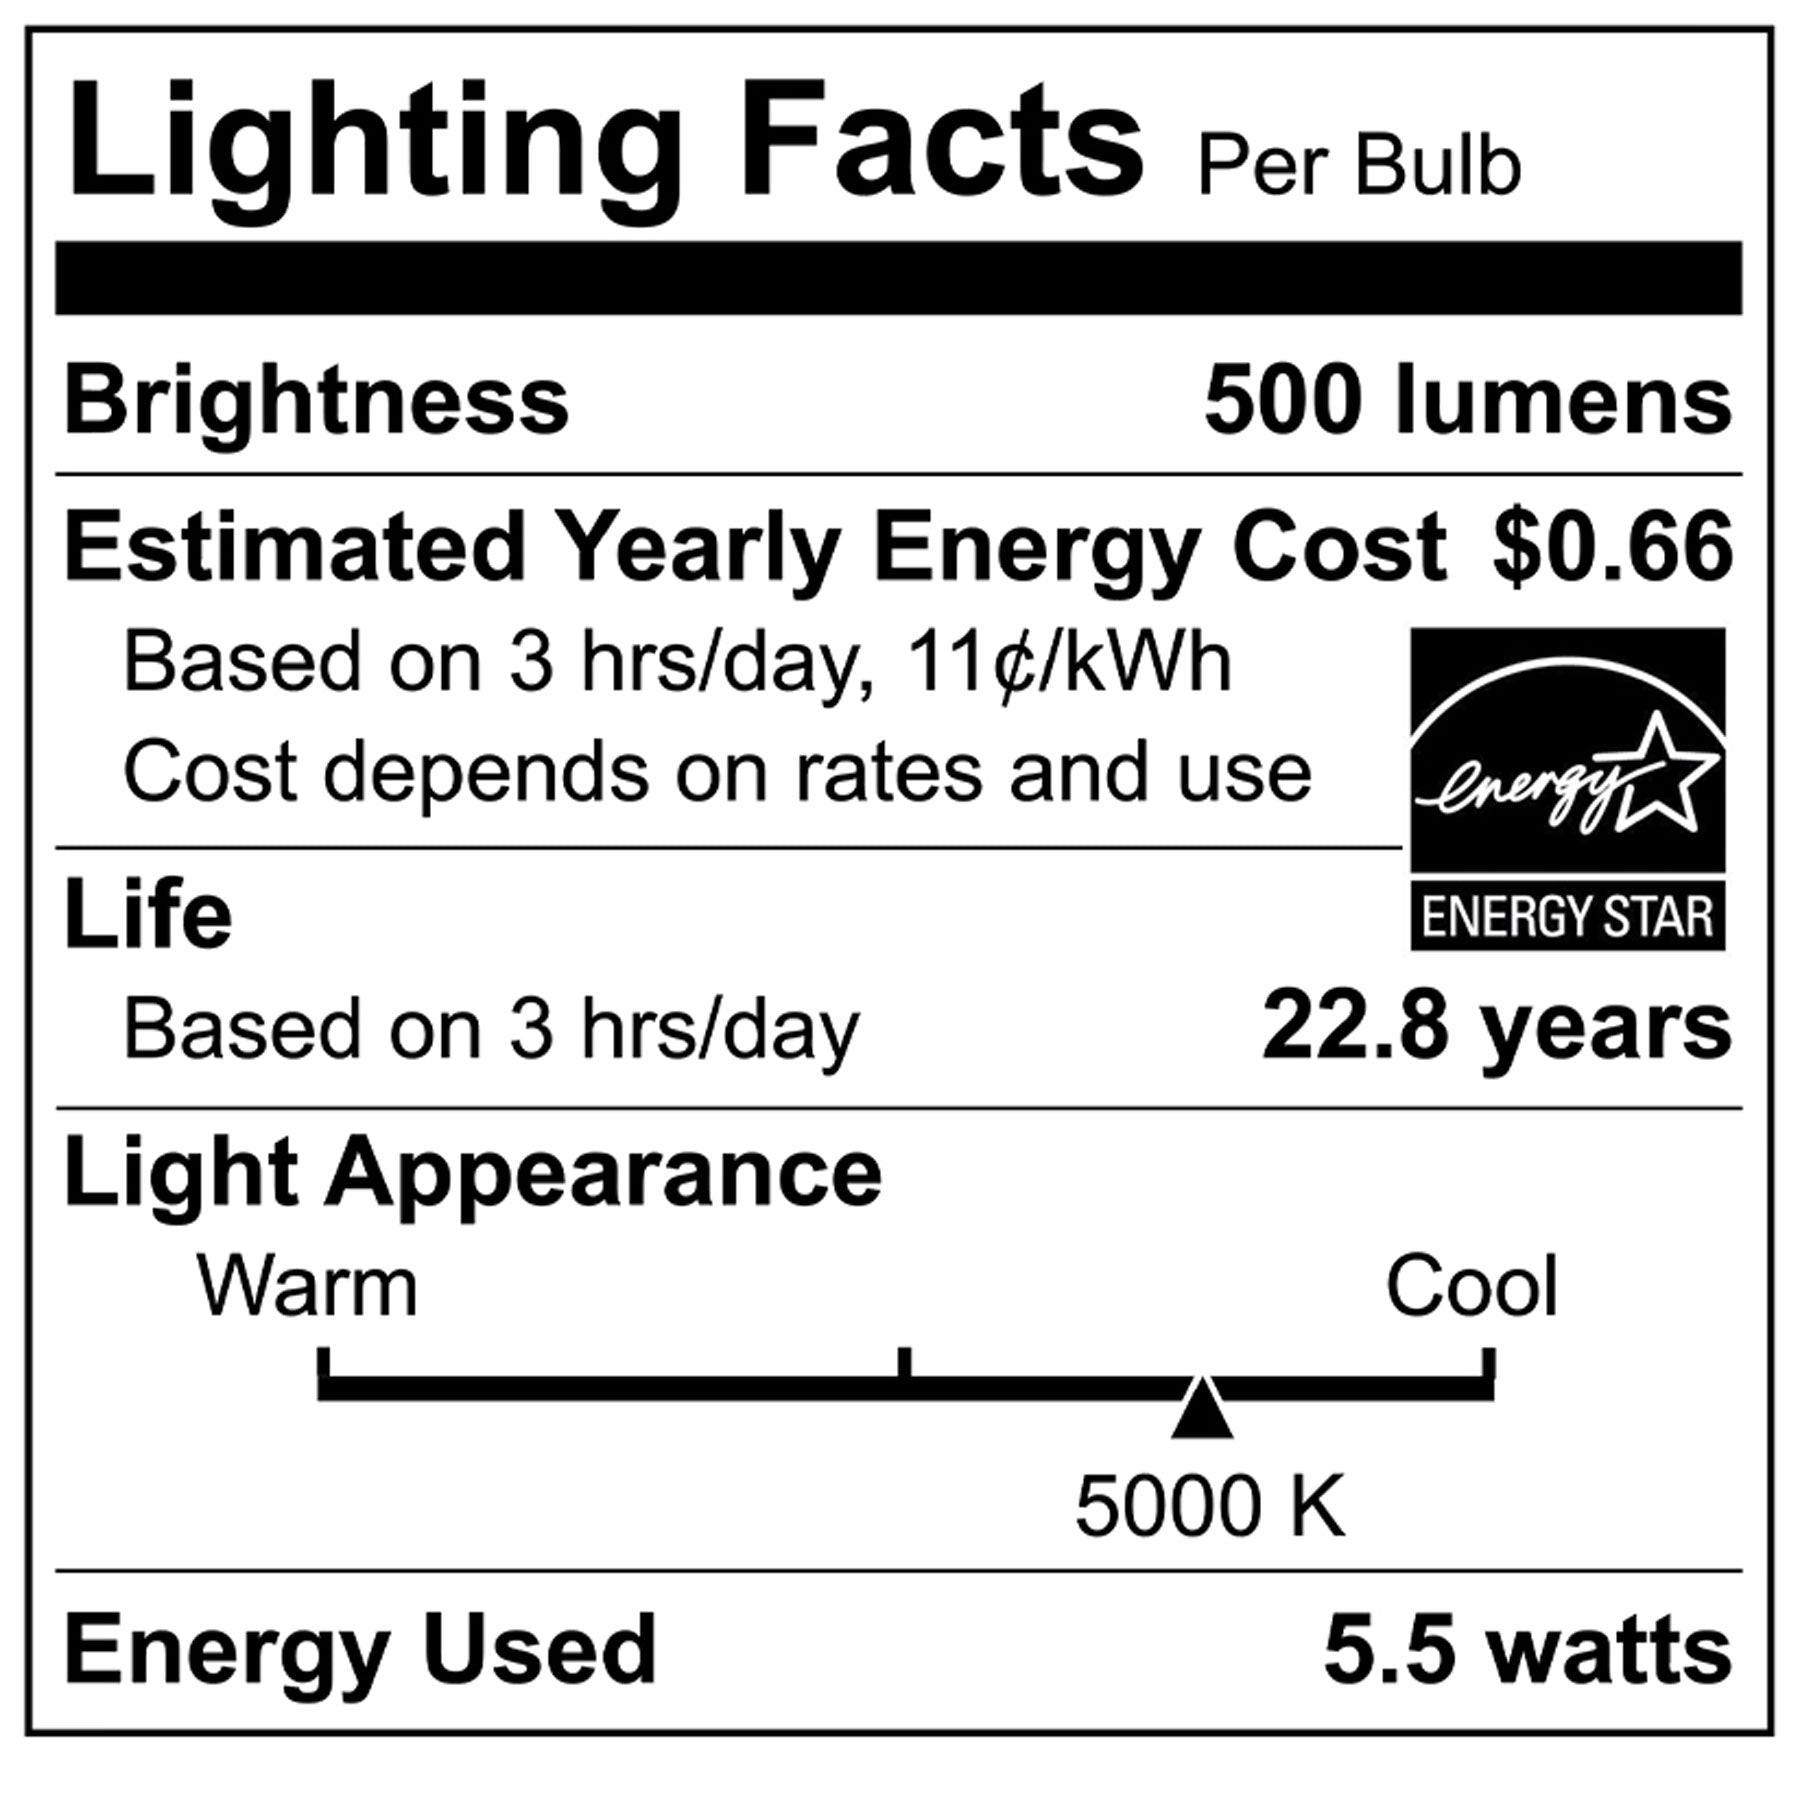 50-Watt Equivalent PAR20 E26 LED Flood Light Bulb